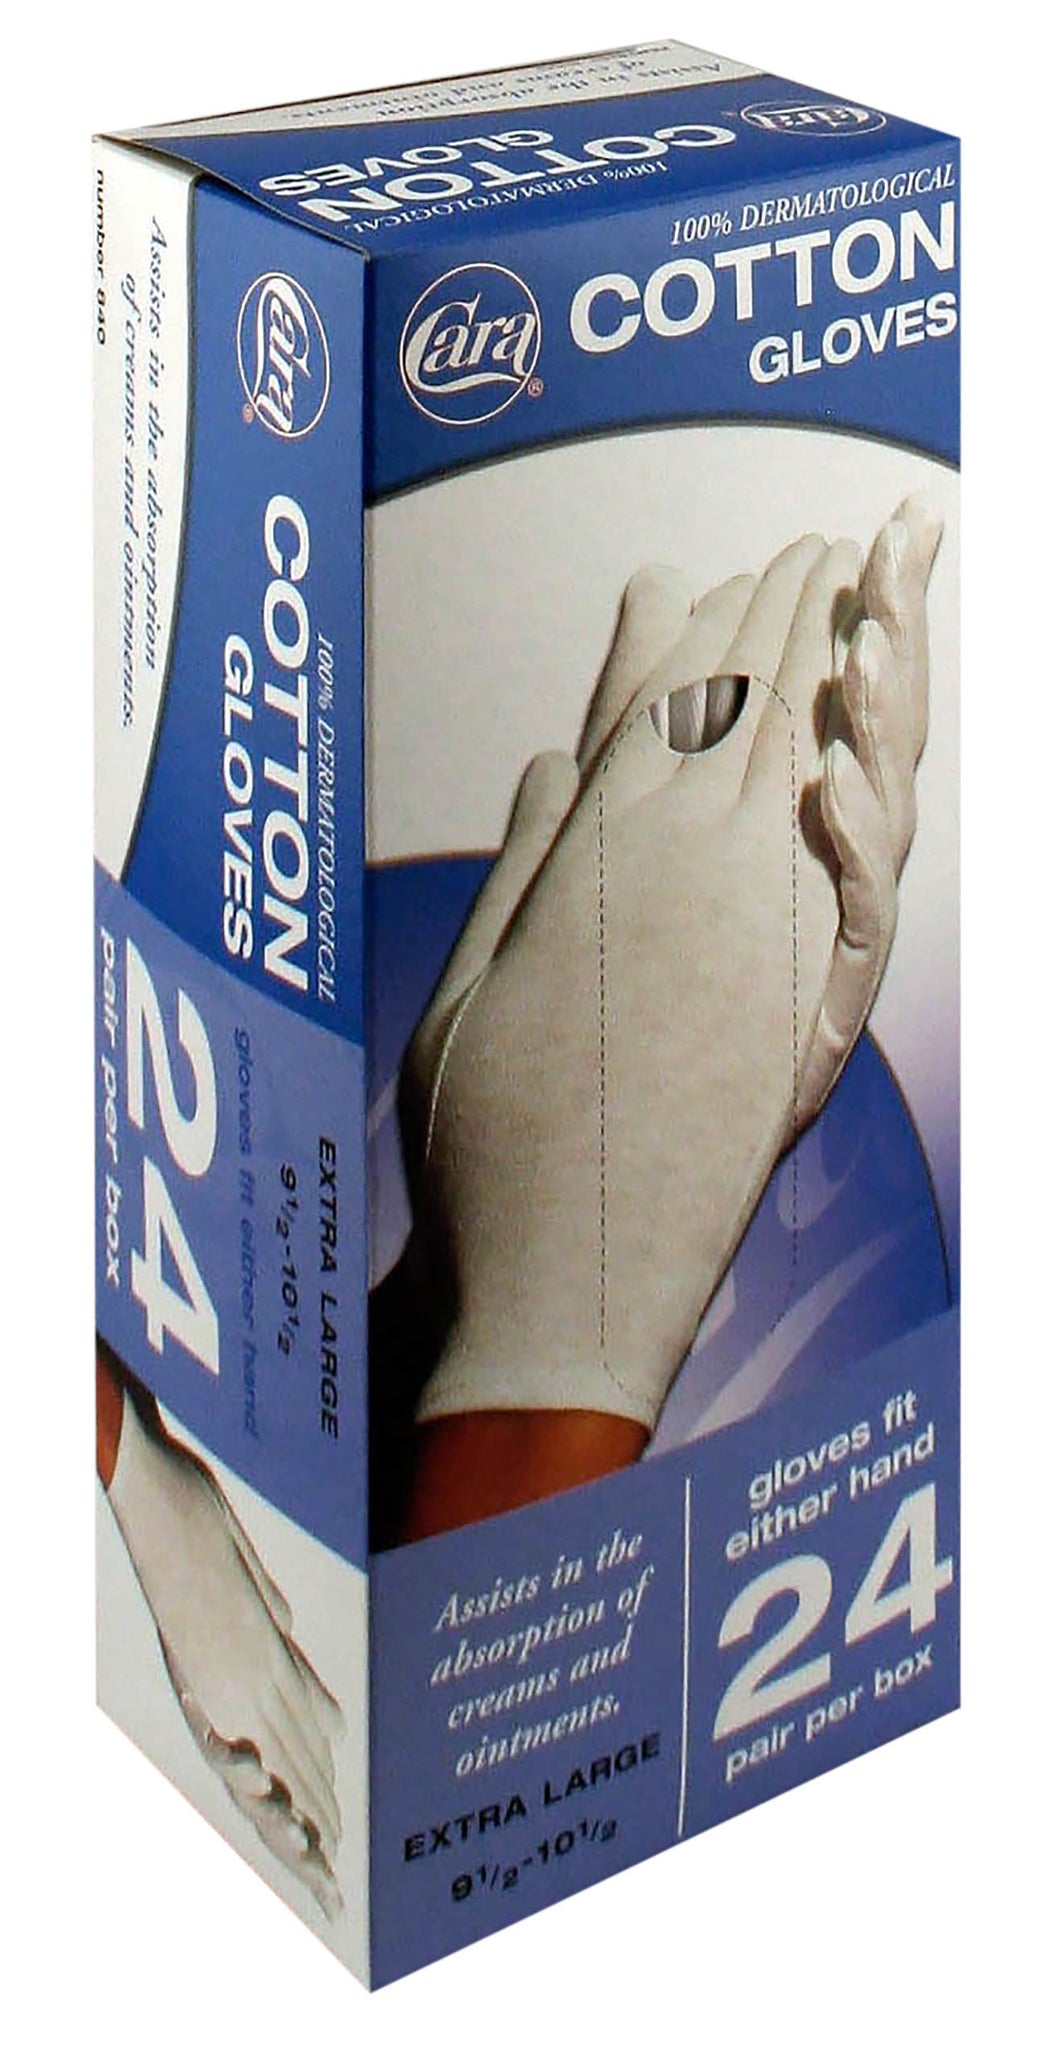 Model #840 - Dermatological Cotton Gloves, Extra Large